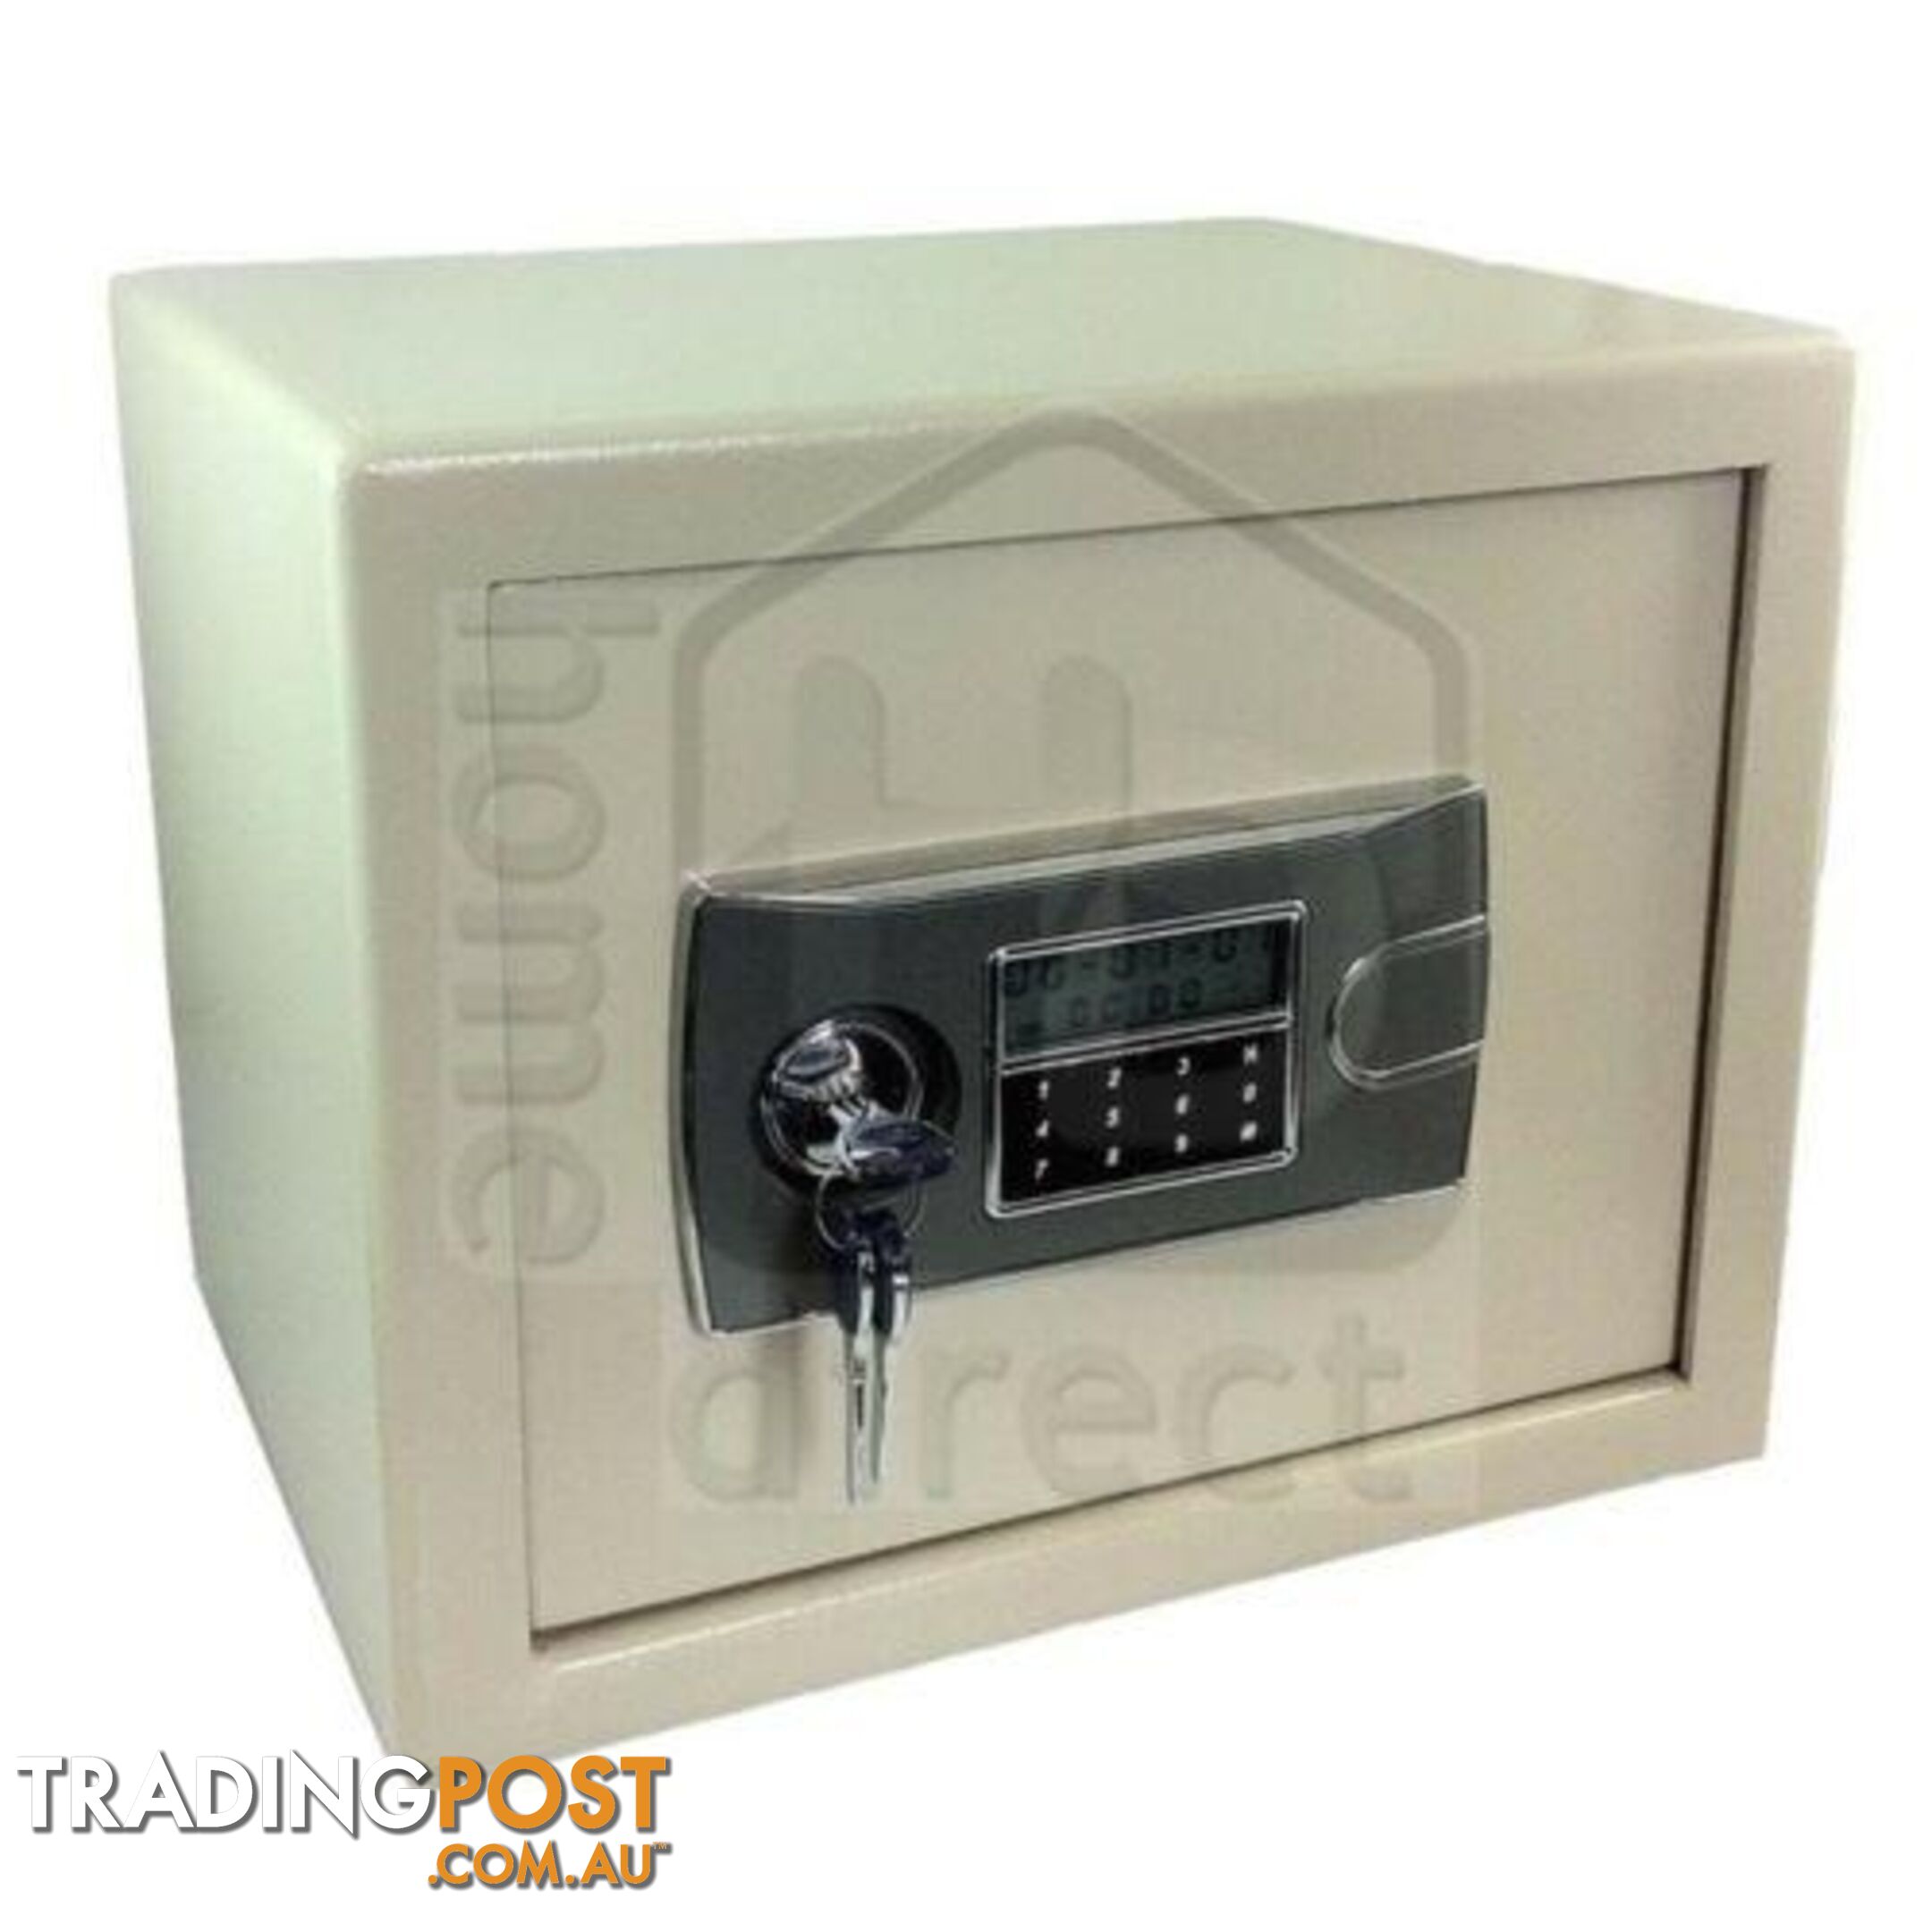 ELECTRONIC DIGITAL OFFICE SAFE SAFETY BOX DISPLAY SCREEN - 38cm x 33cm - Safe Q2 - 300mm